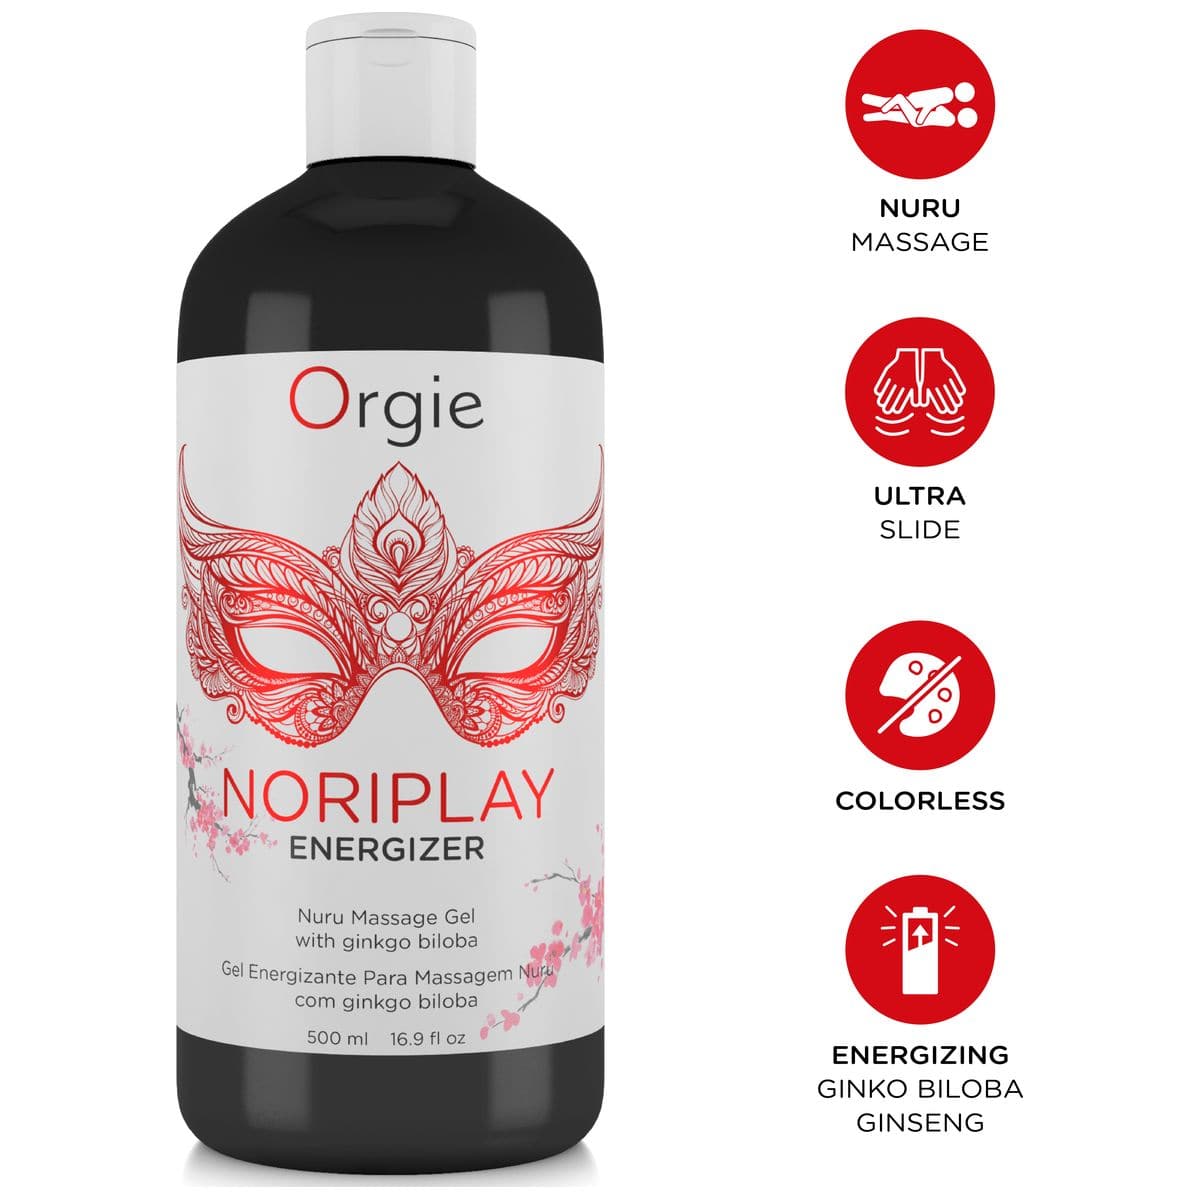 Massagem Nuru - Orgie Noriplay Energizer, 500ml (massagem corpo a corpo) - Pérola SexShop